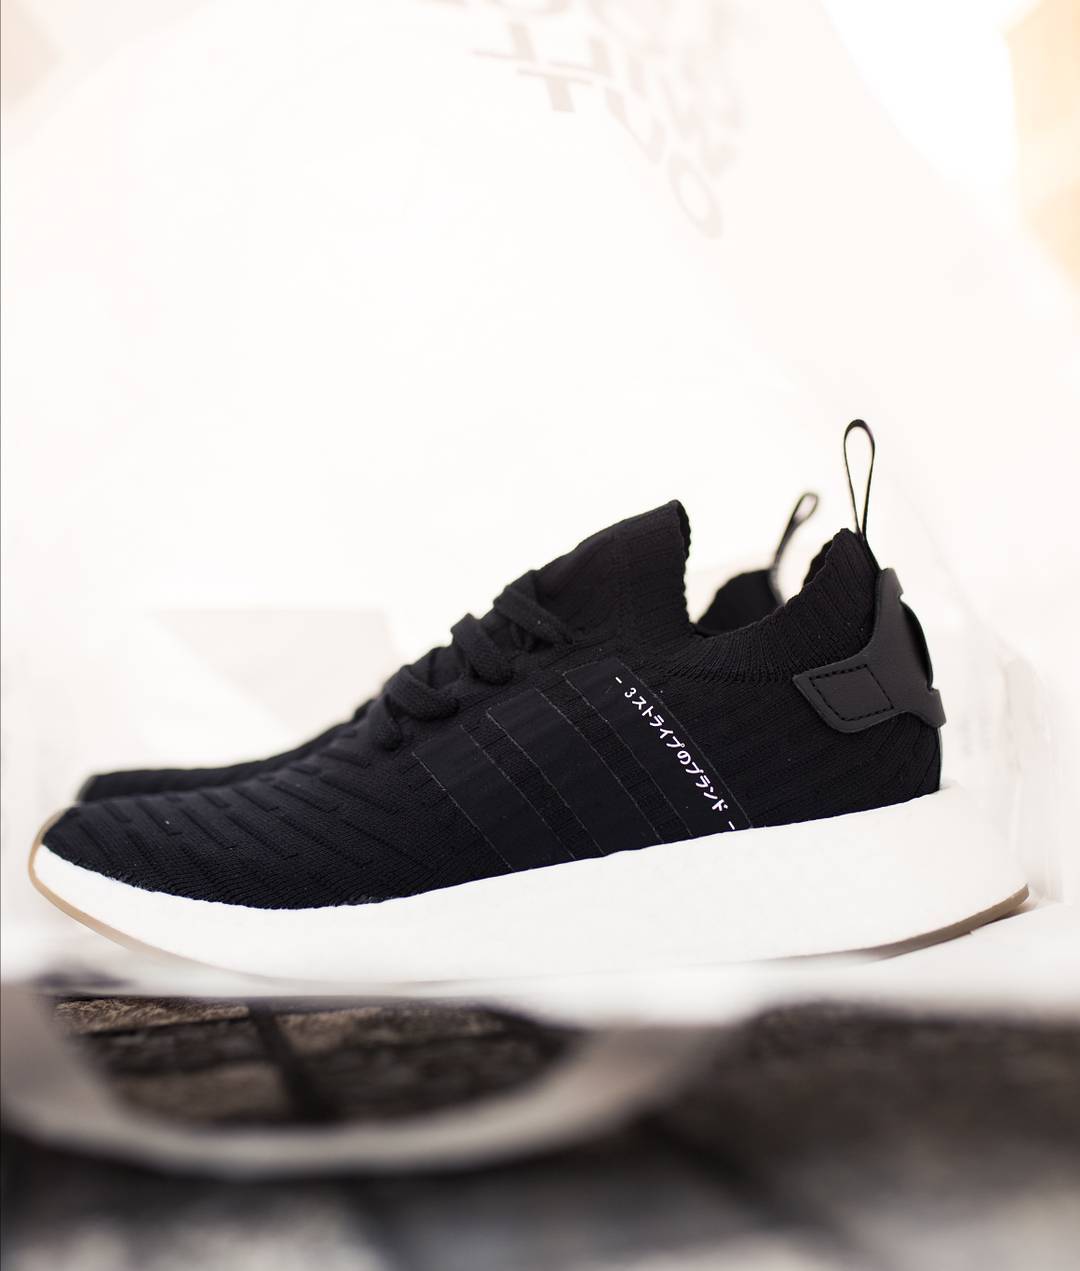 Adidas NMD_R2 Primeknit
Black / White